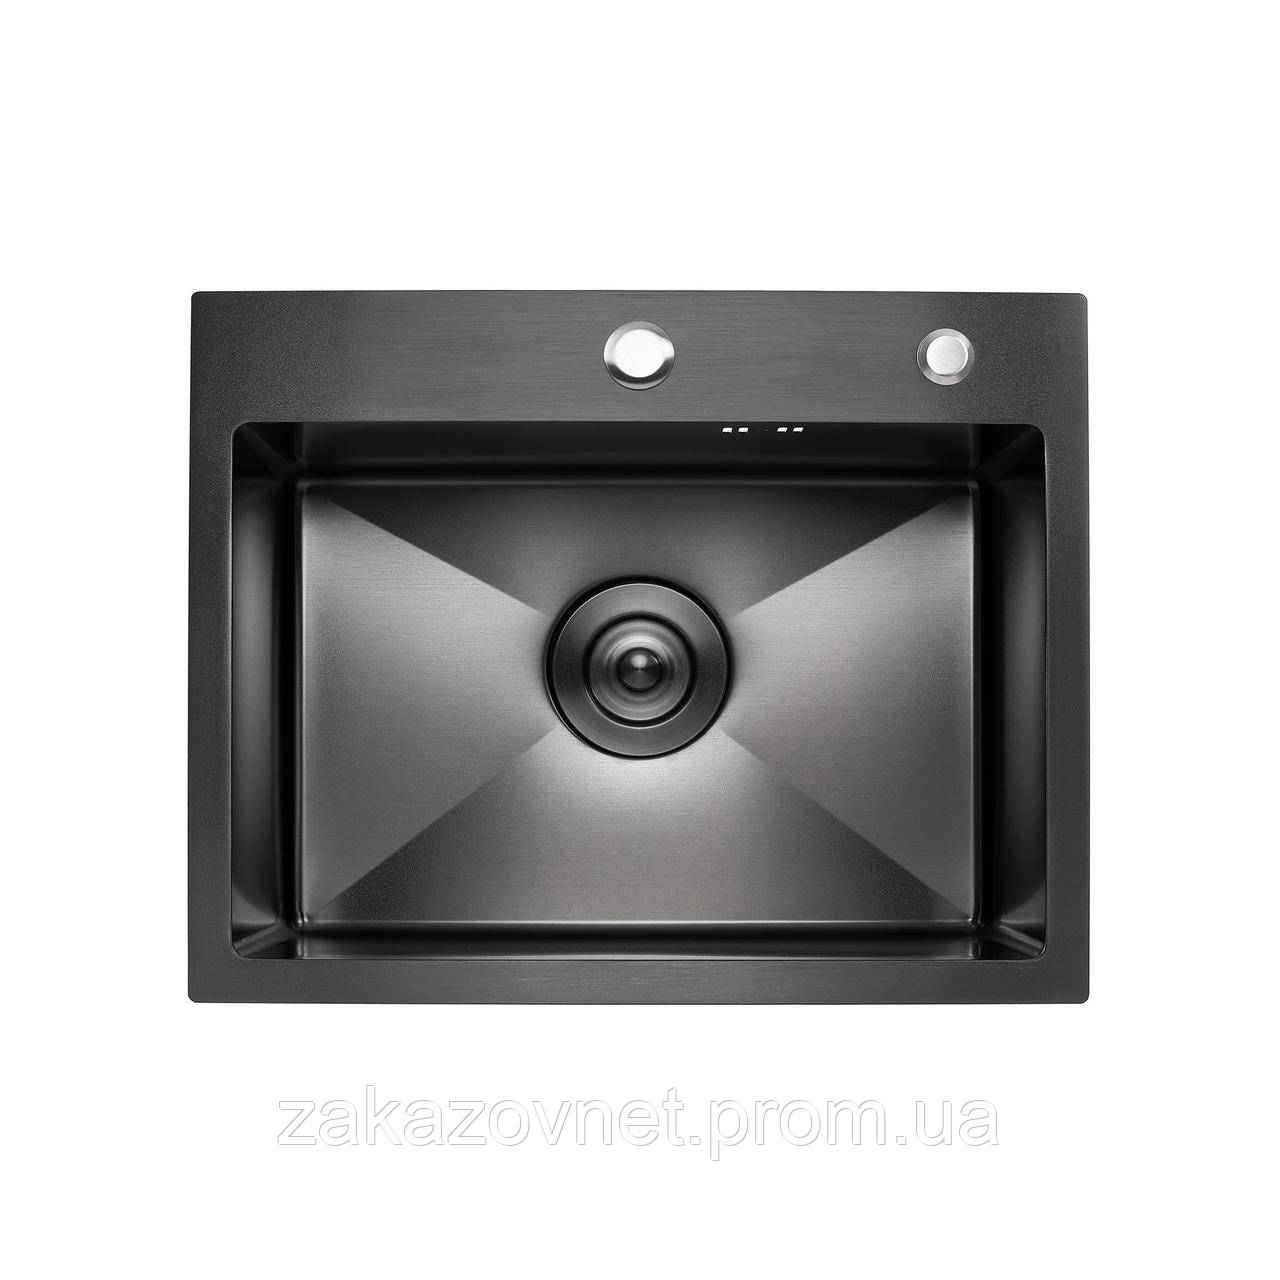 Мийка для кухні Platinum Handmade PVD чорна 500х450х220 (товщина 3,0 1,5 мм, кошик і дозат ZK, код: 8413300